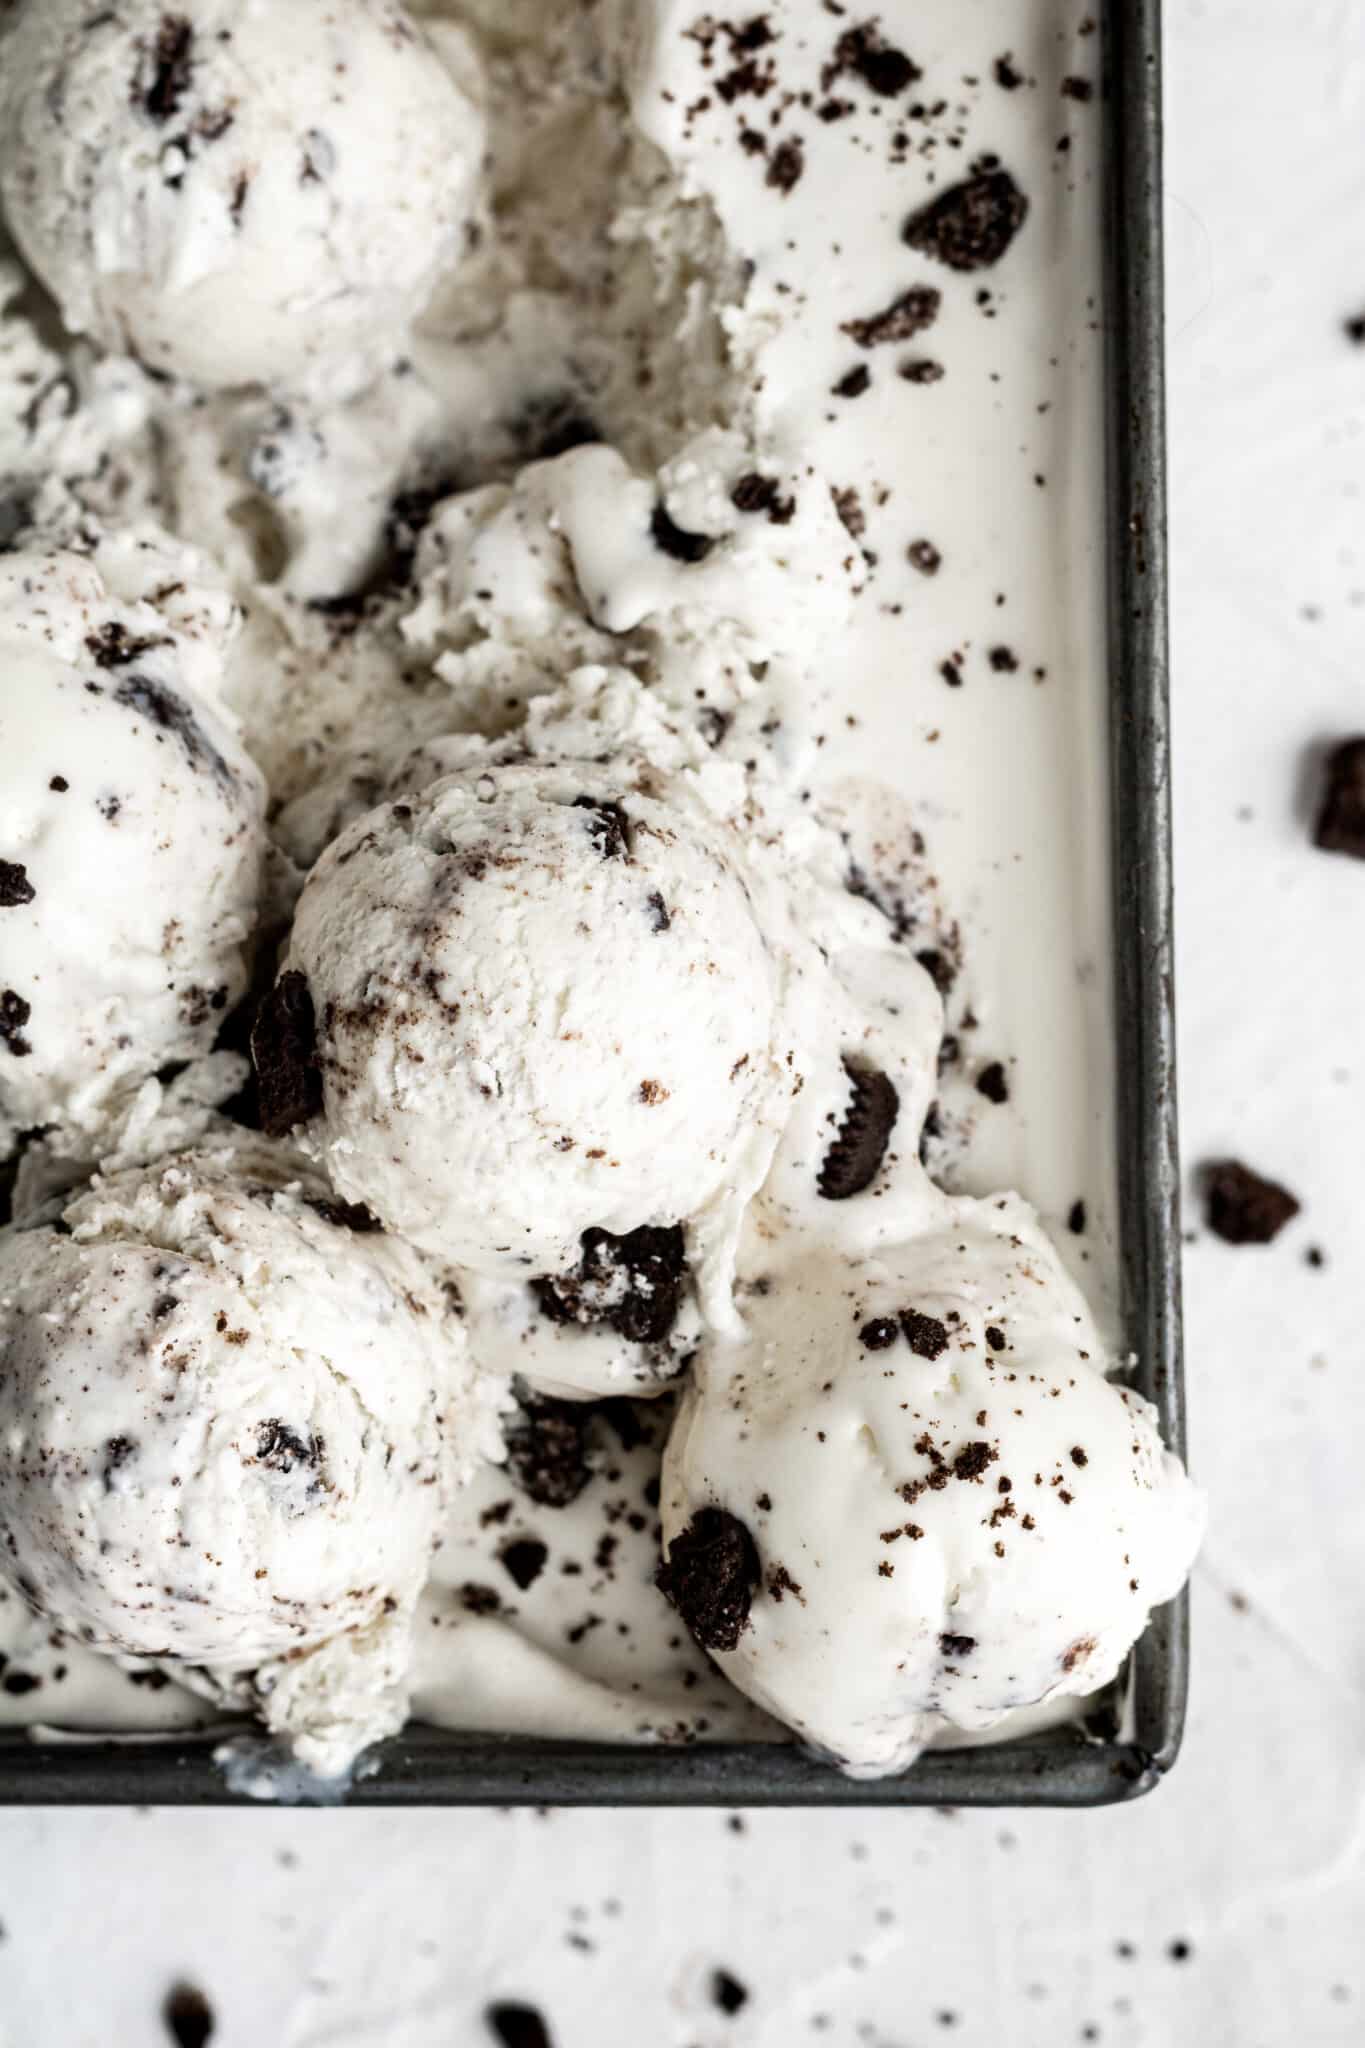 https://www.simplylakita.com/wp-content/uploads/2017/08/Cookies-and-Cream-Ice-Cream-Simply-LaKita-1-1-scaled.jpg